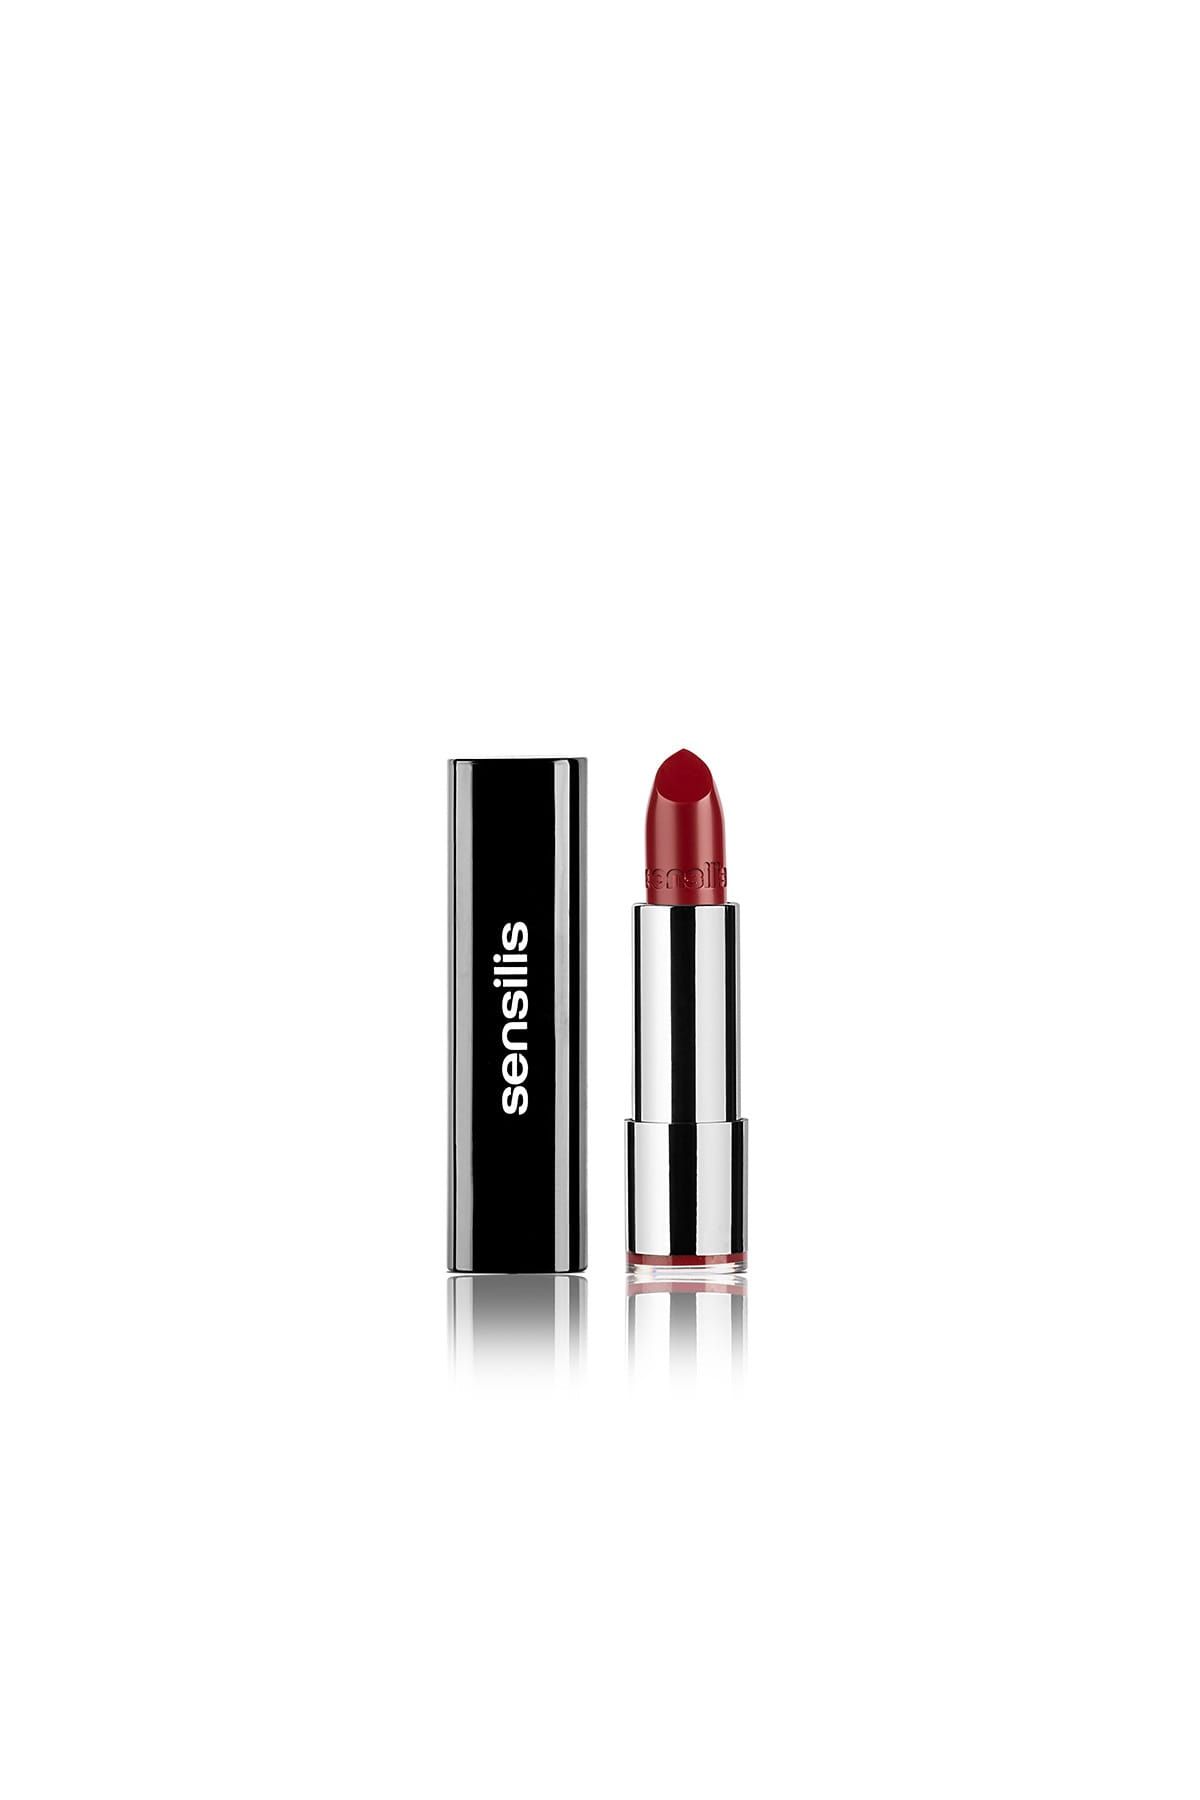 sensilis Ruj - Velvet Satin Comfort Lipstick 214 Pourpre 8428749522508